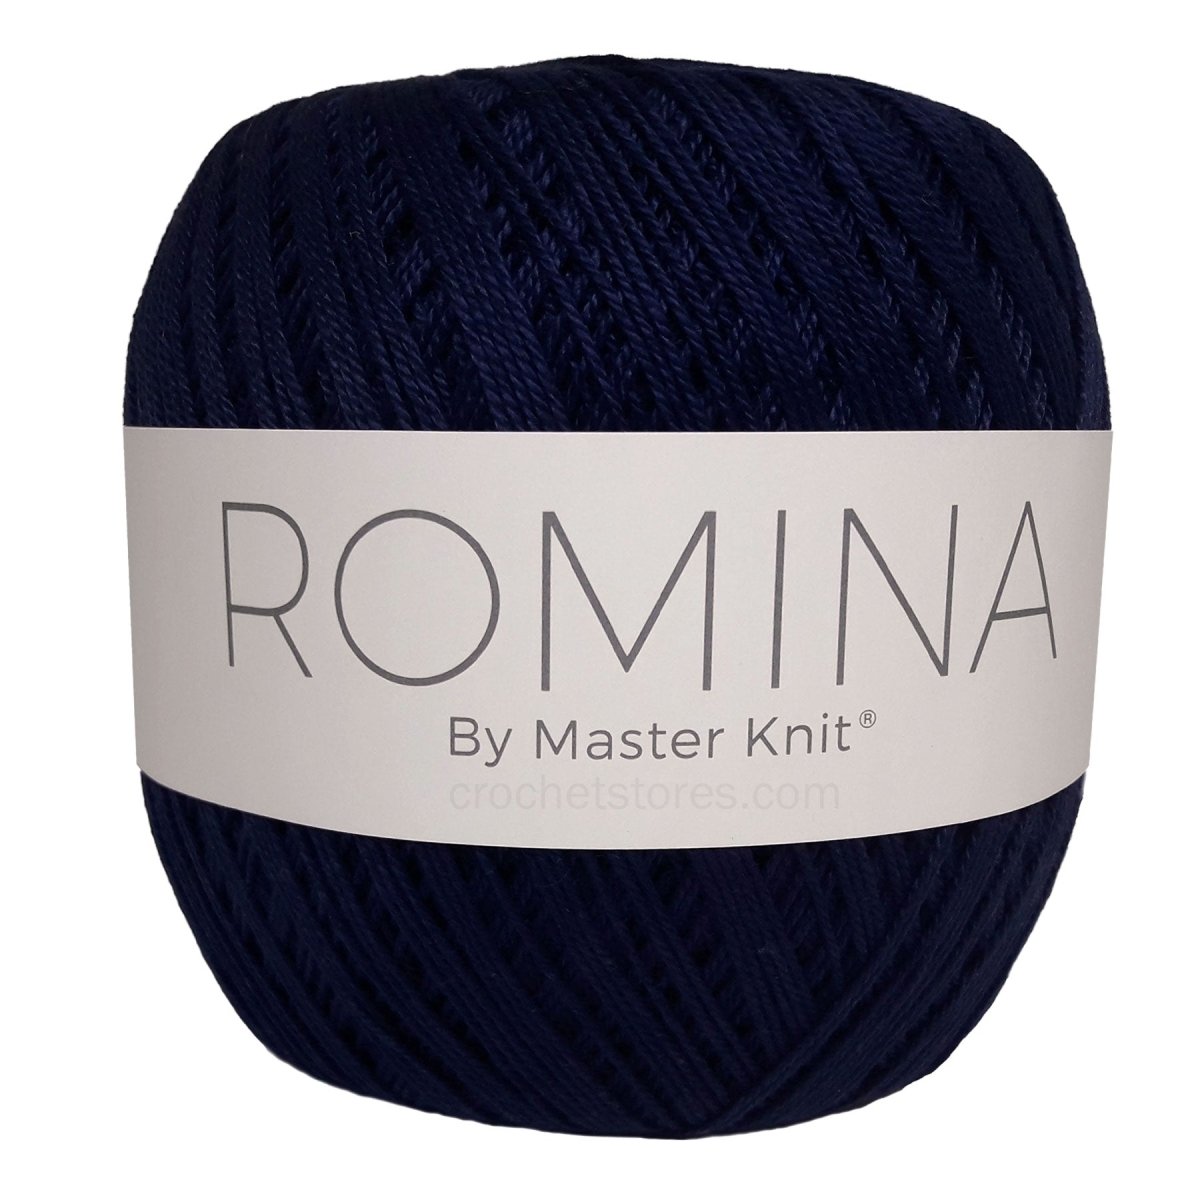 ROMINA - Crochetstores9335-148745051438487